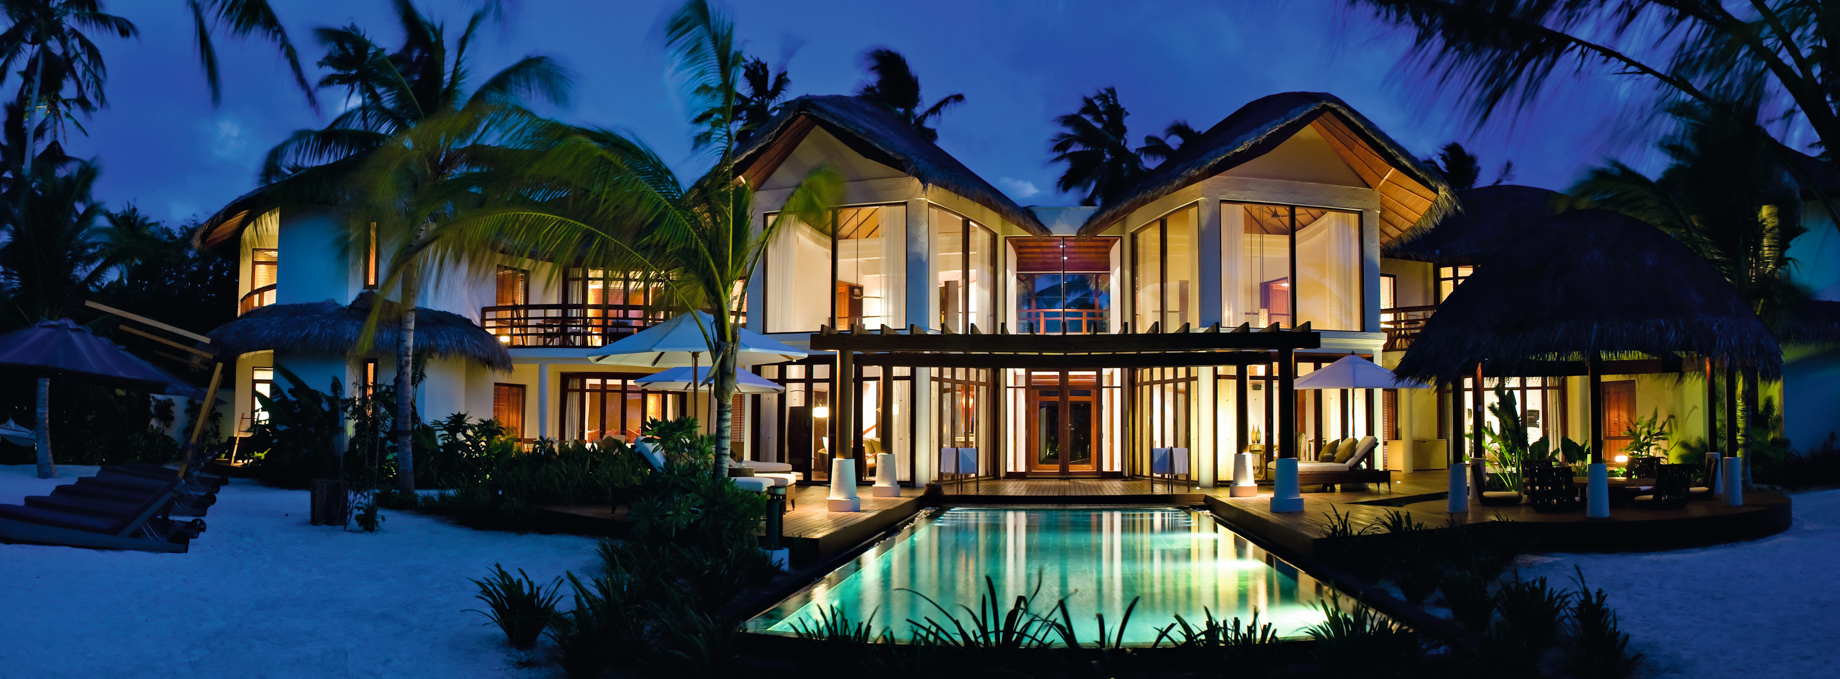 Constance Halaveli Resort - North Ari Atoll, Maldives - Presidential Villa Exterior Night View